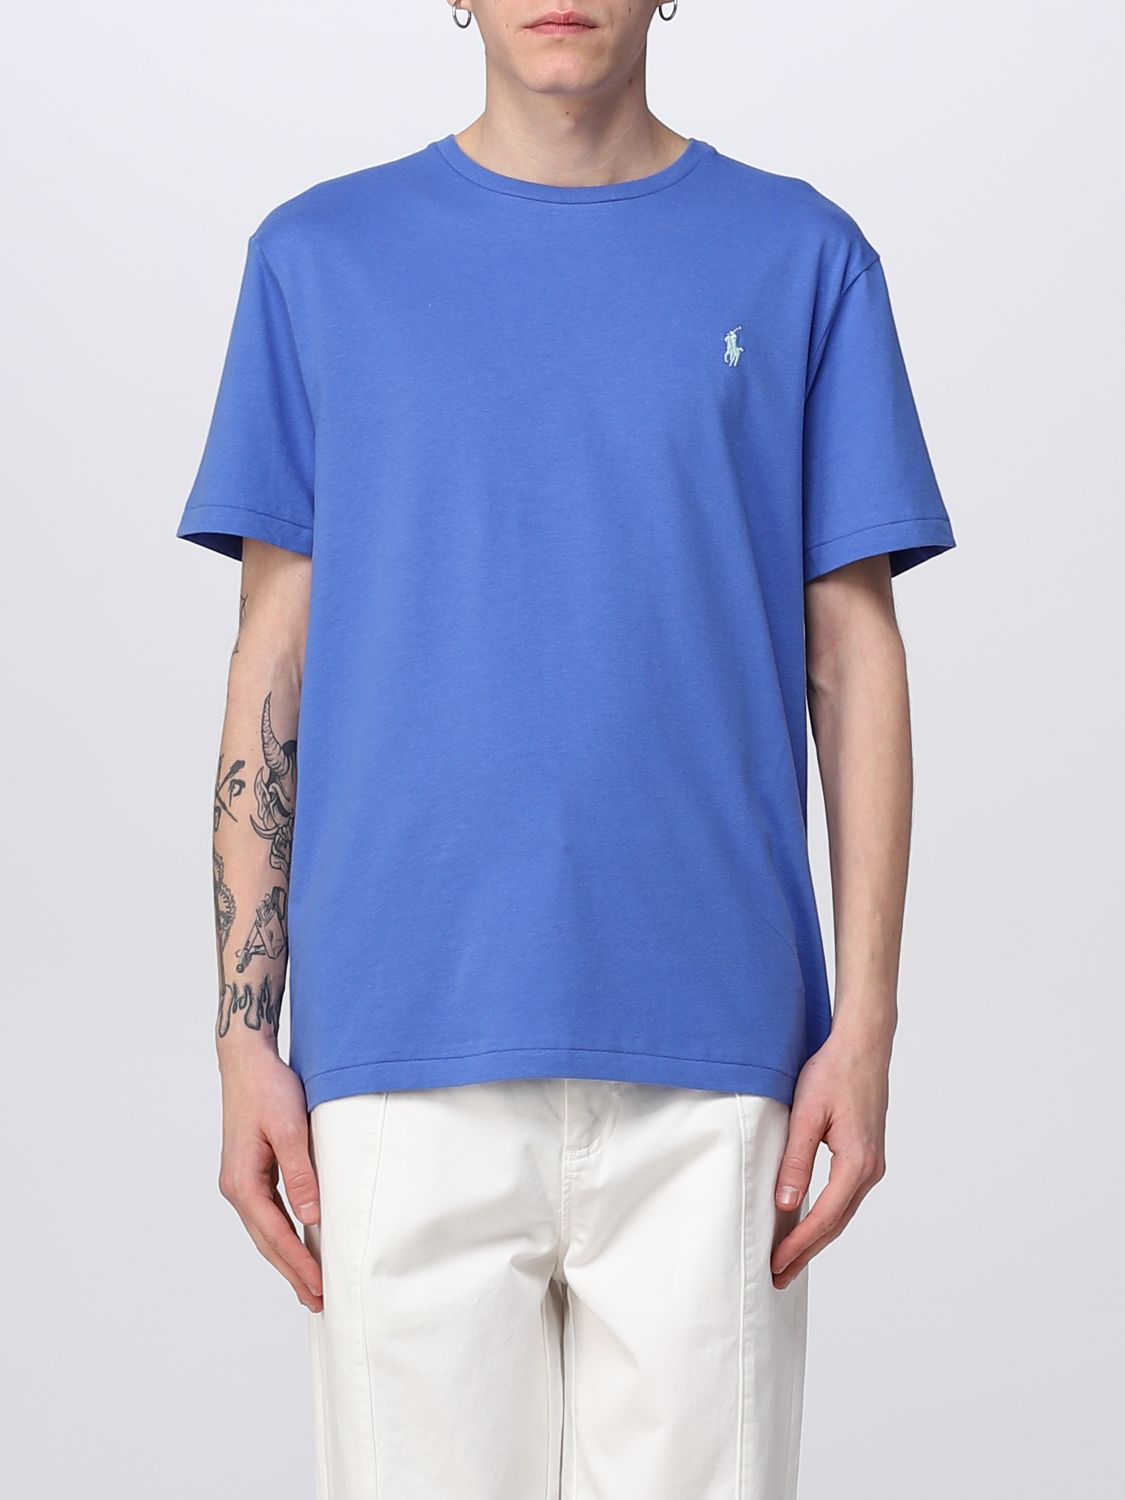 POLO RALPH LAUREN: t-shirt for man - Violet | Polo Ralph Lauren t-shirt  710671438 online on 